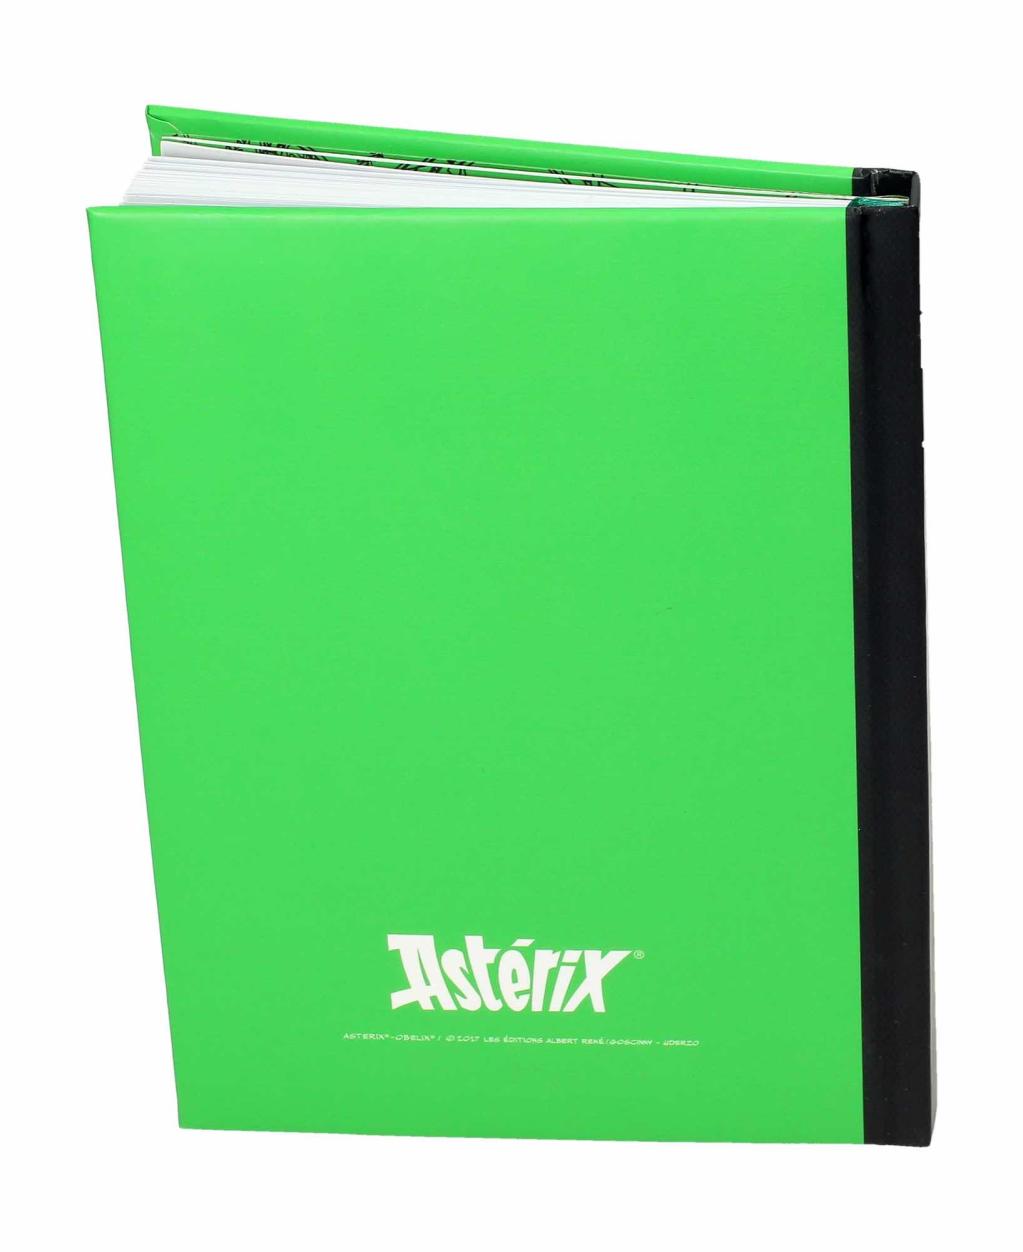 ASTERIX - Panoramix Cauldron - Notebook with Light"15x25x3cm"